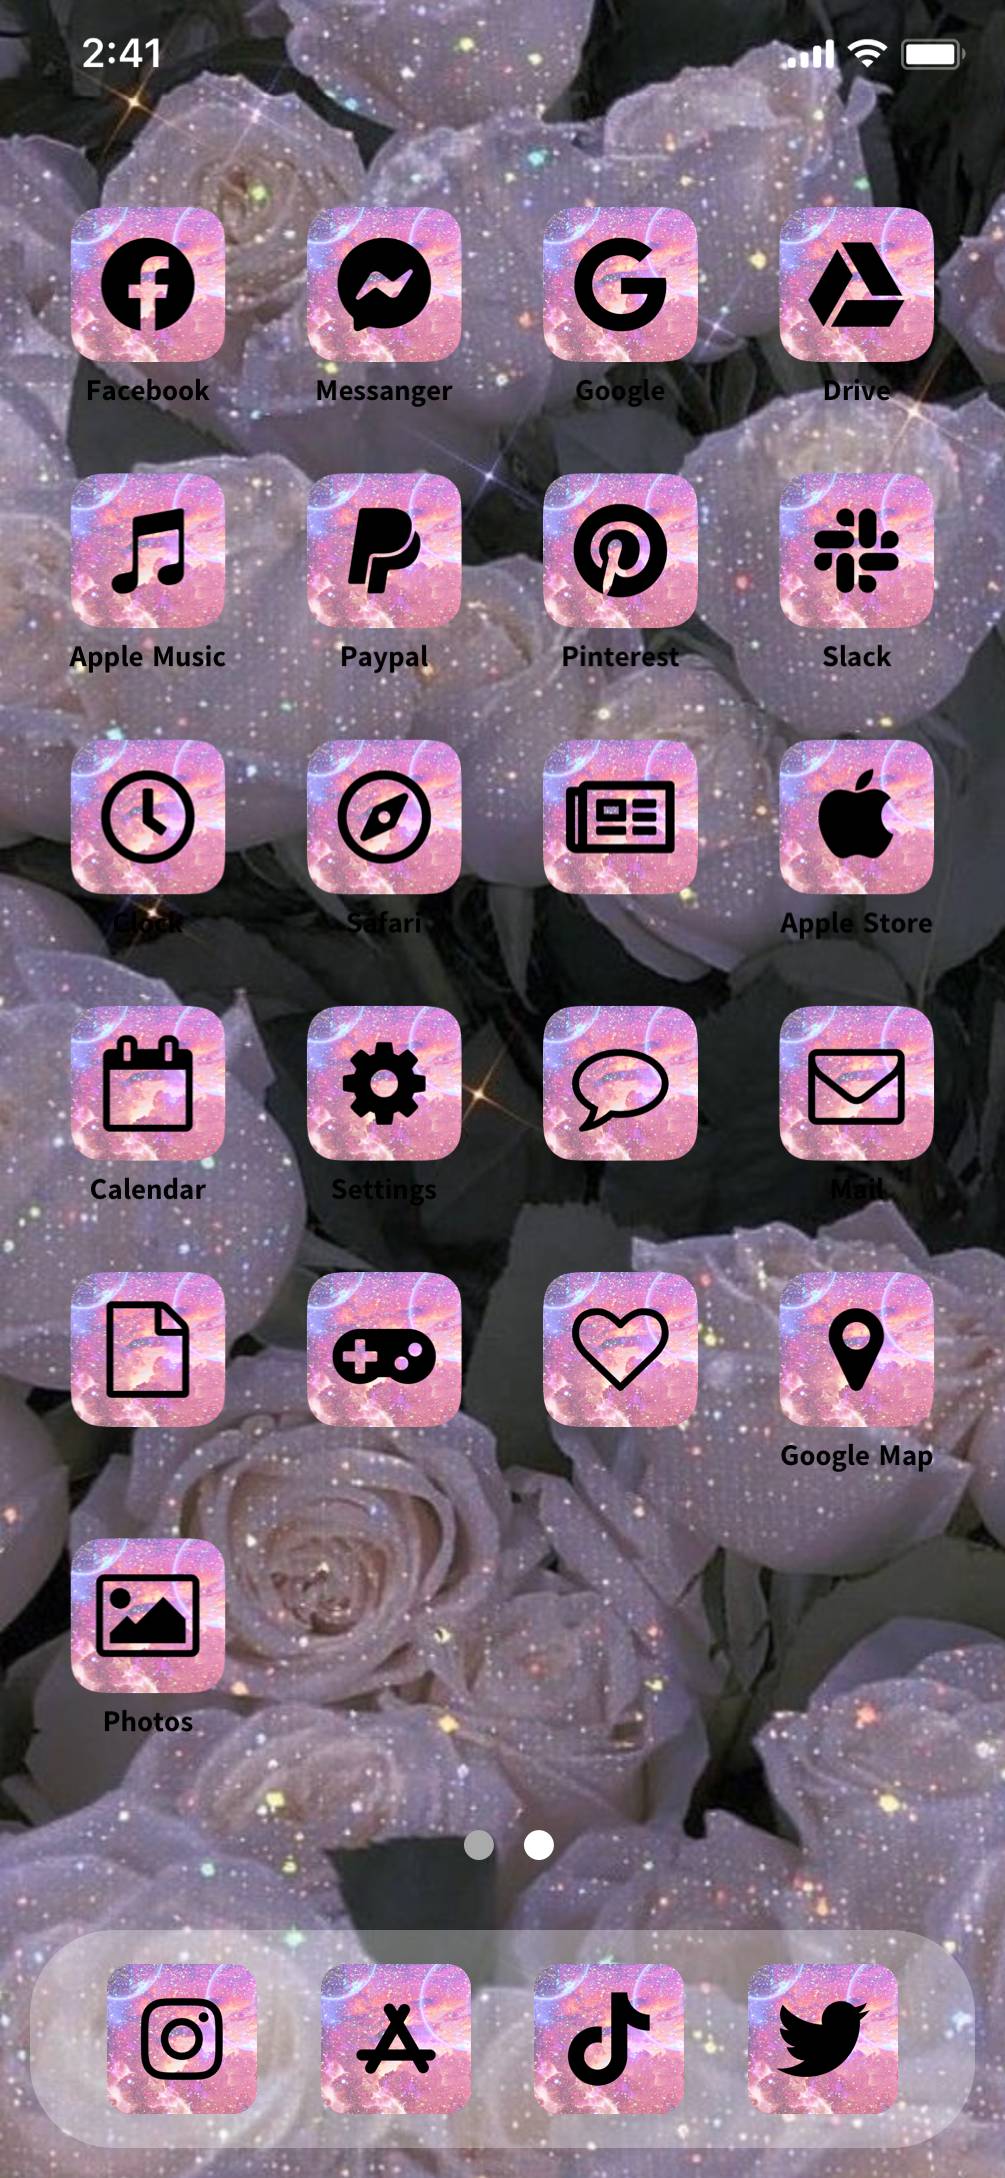 Pink, SparklyIdées d'écran d'accueil[PIknGqZOKnOR3ELuB7Aq]